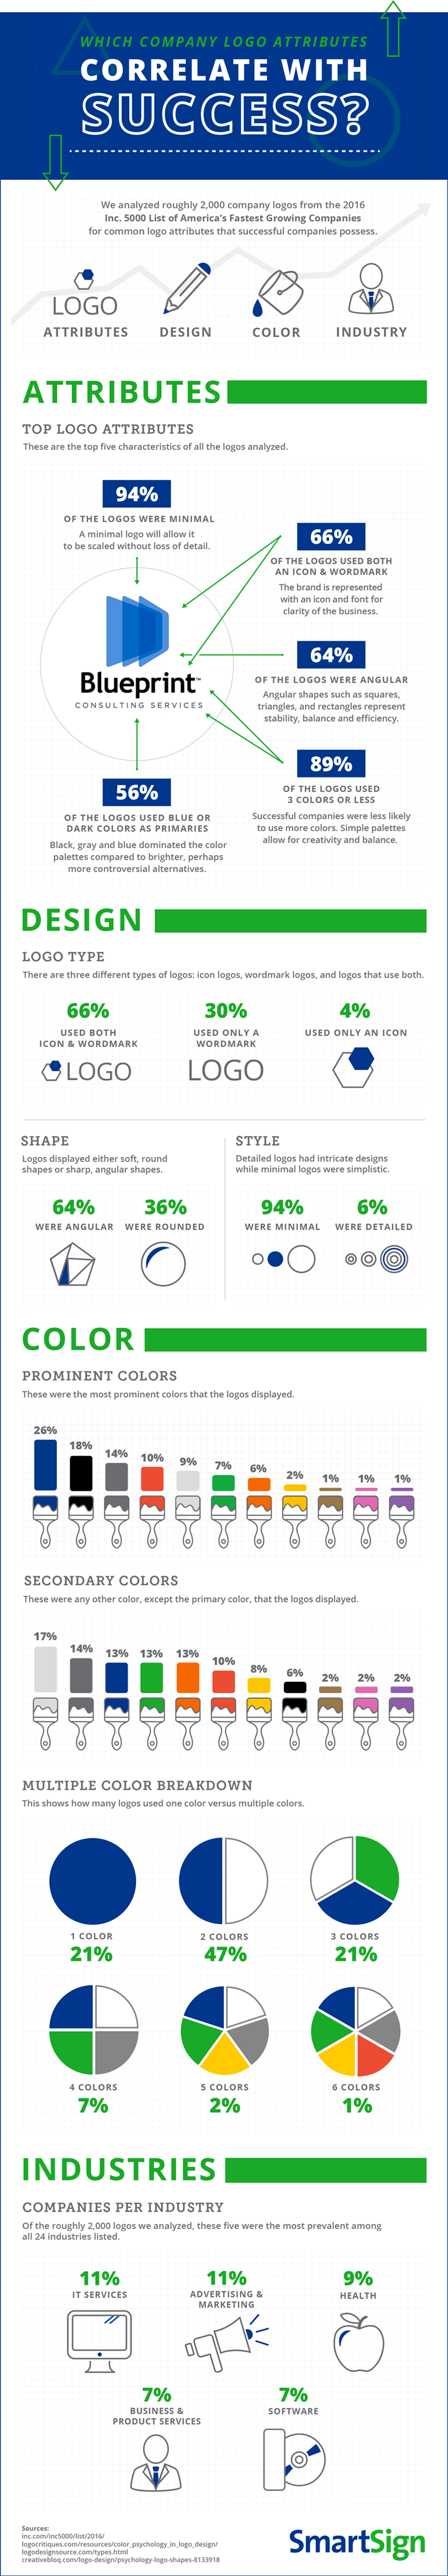 infographie-couleurs-logo-design-entreprises-celebres